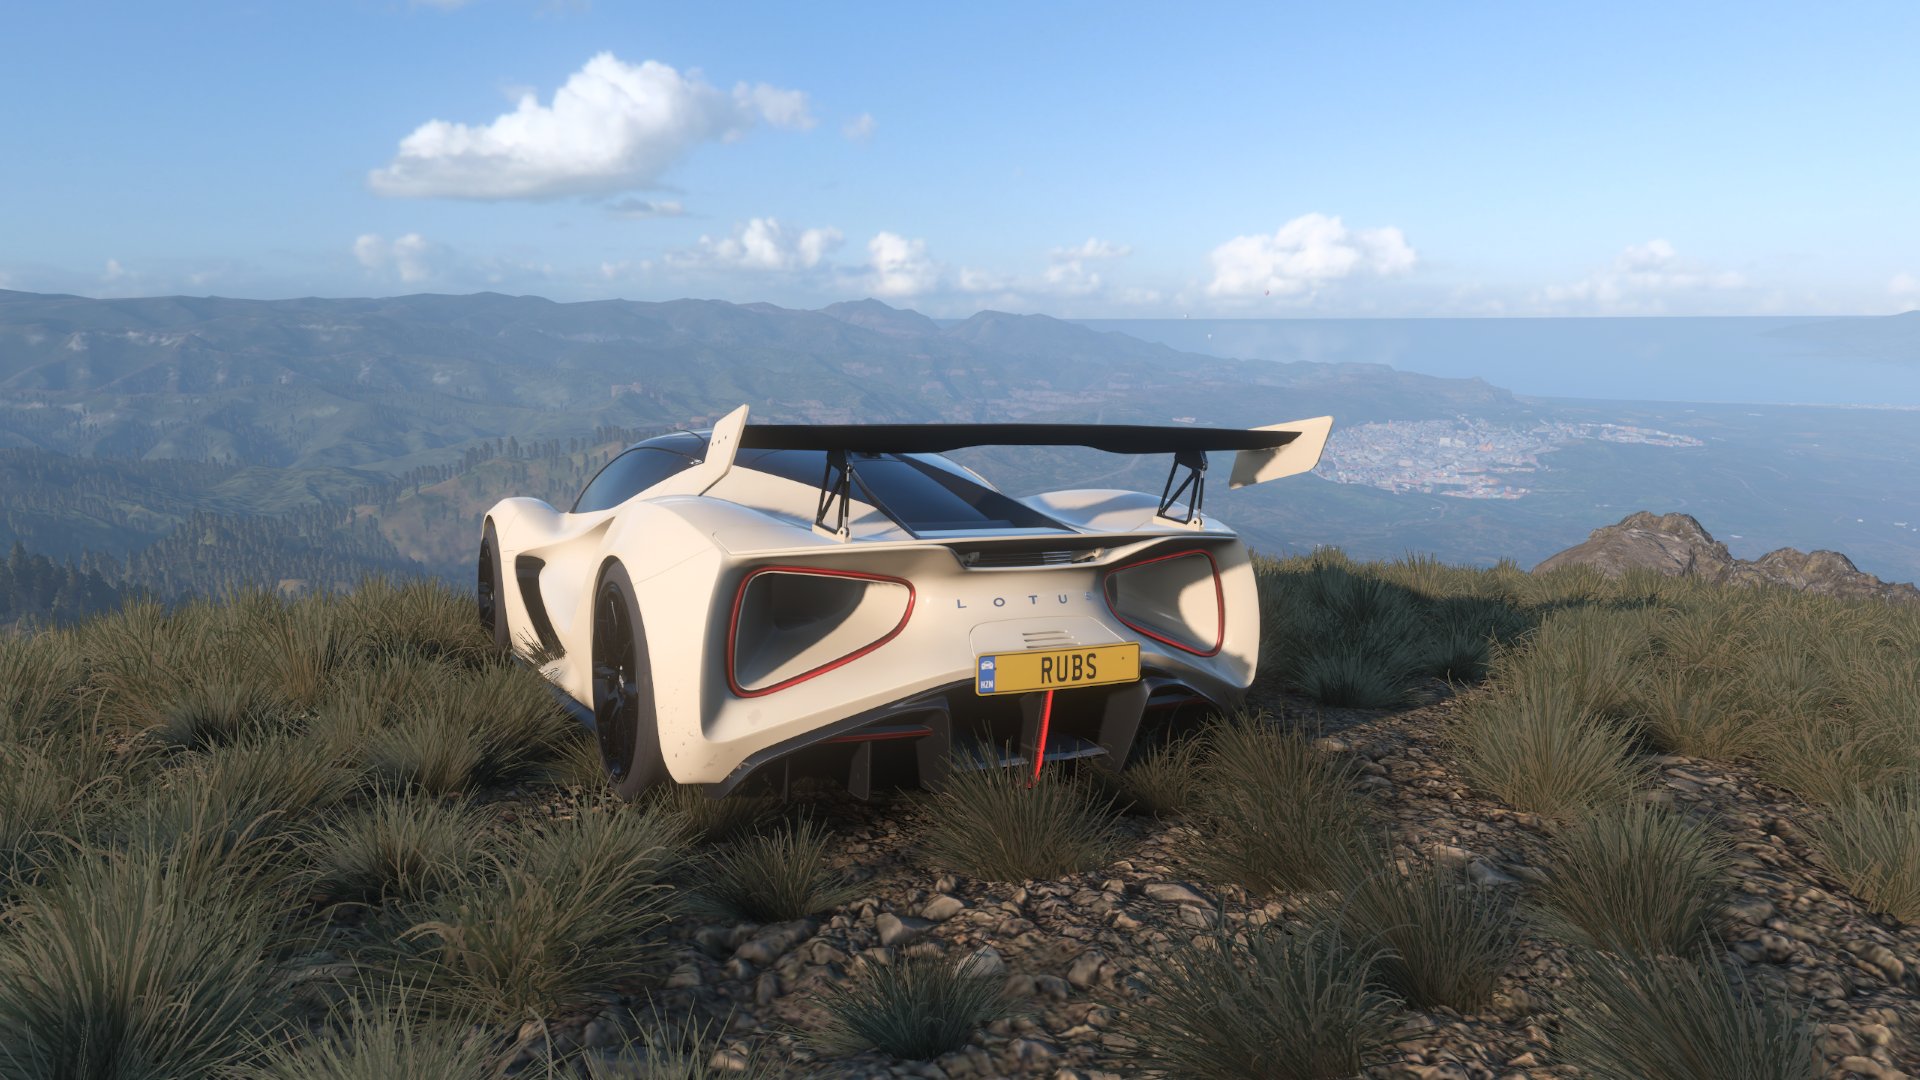 NIO EP9 Featured in Forza Horizon 5